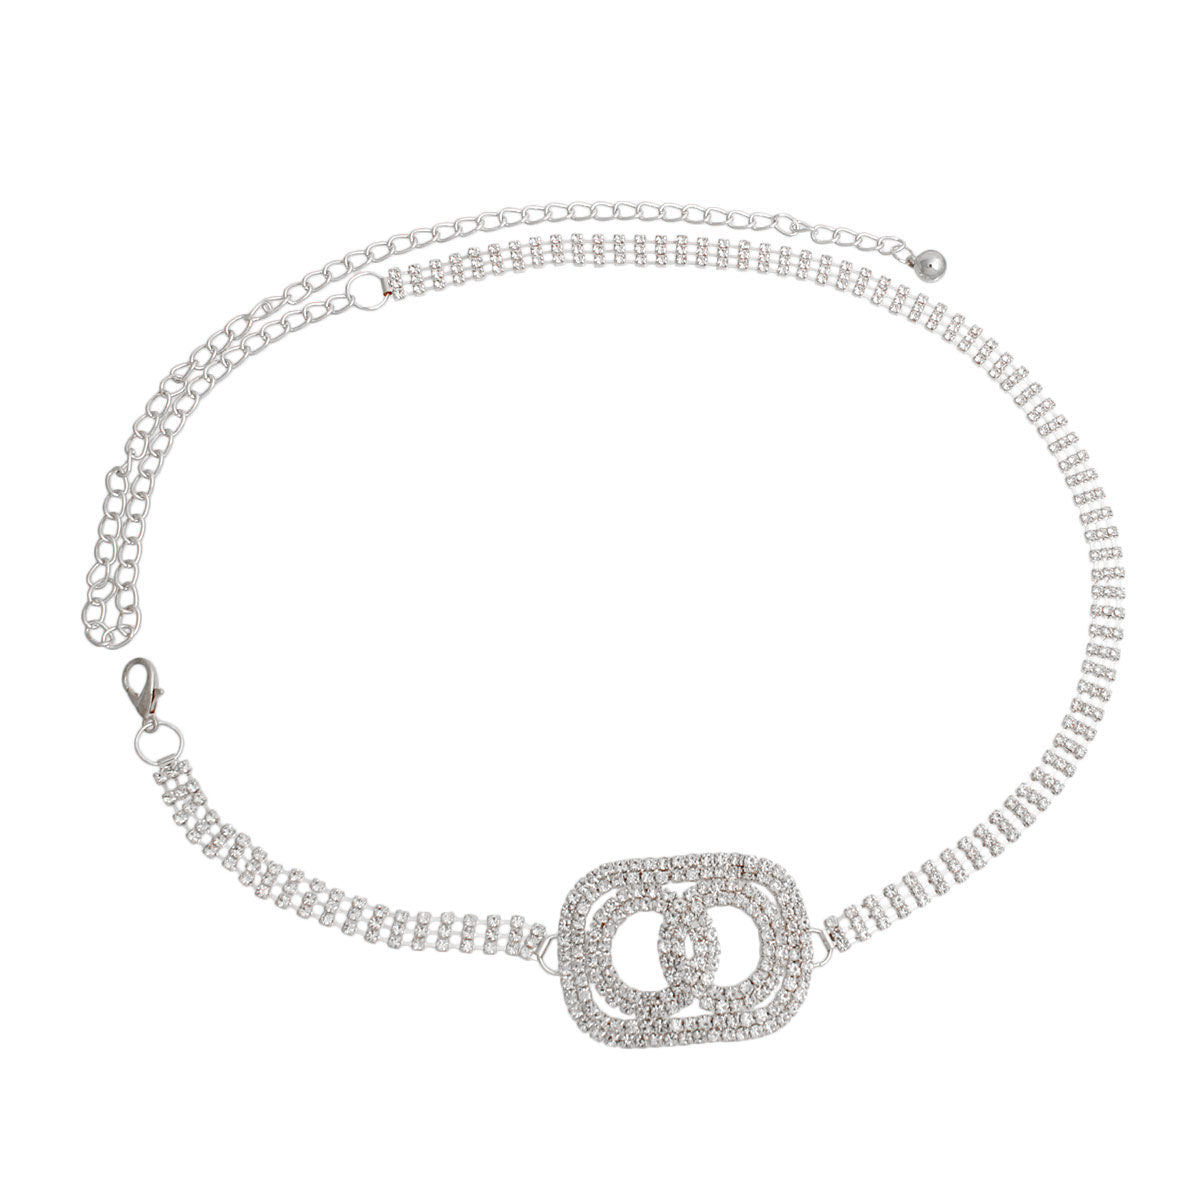 Silver Embellished Infinity Link Chain Belt